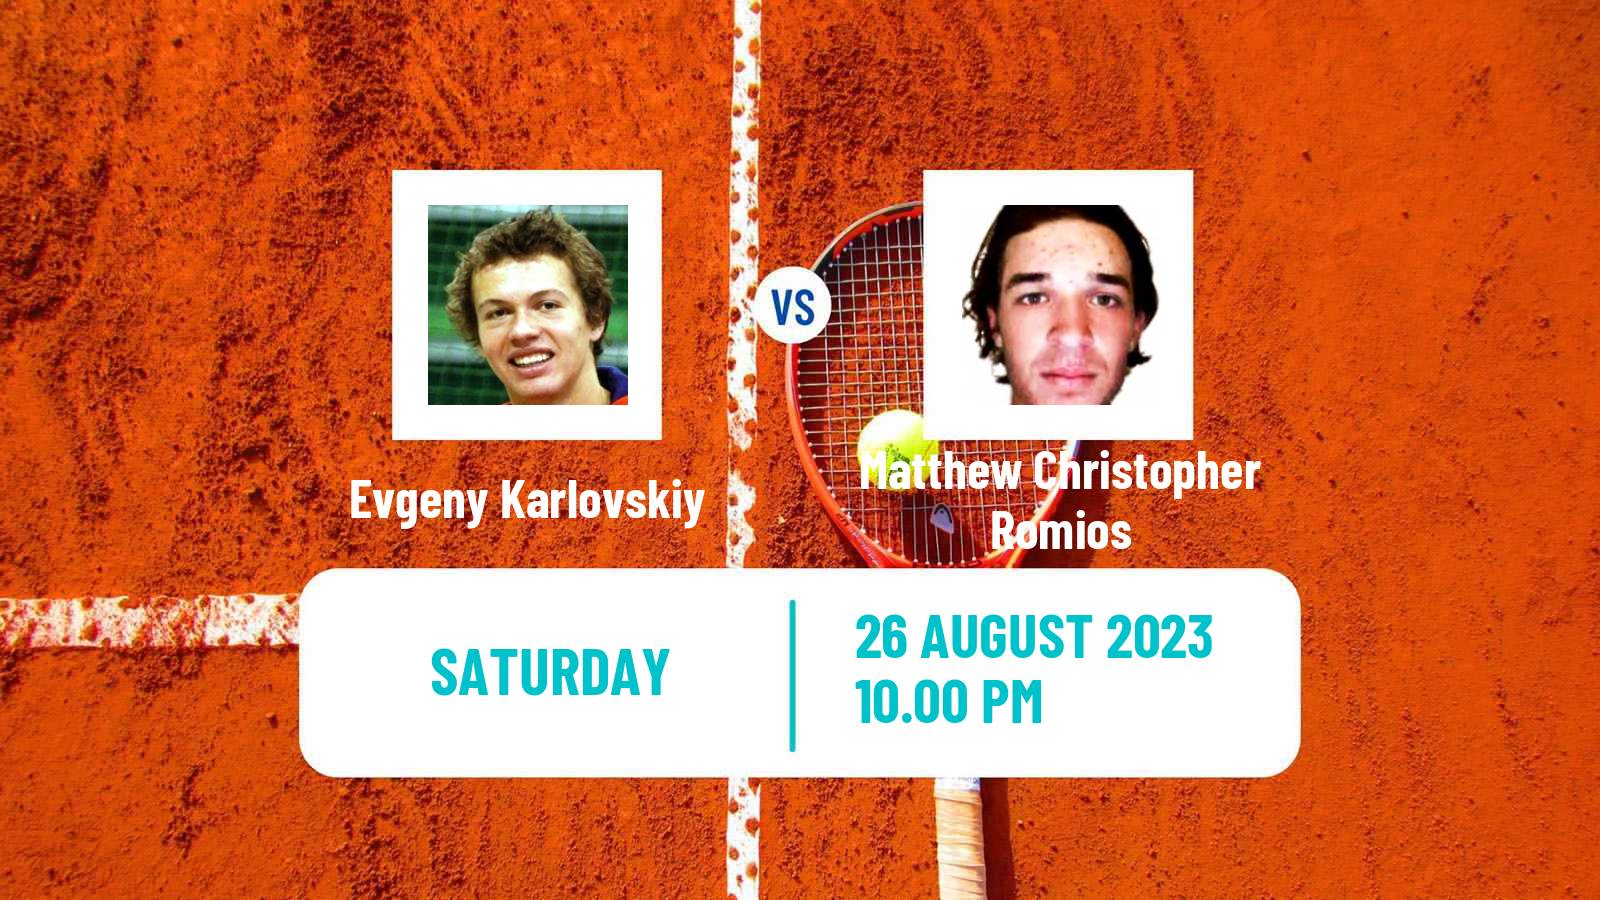 Tennis Zhangjiagang Challenger Men Evgeny Karlovskiy - Matthew Christopher Romios